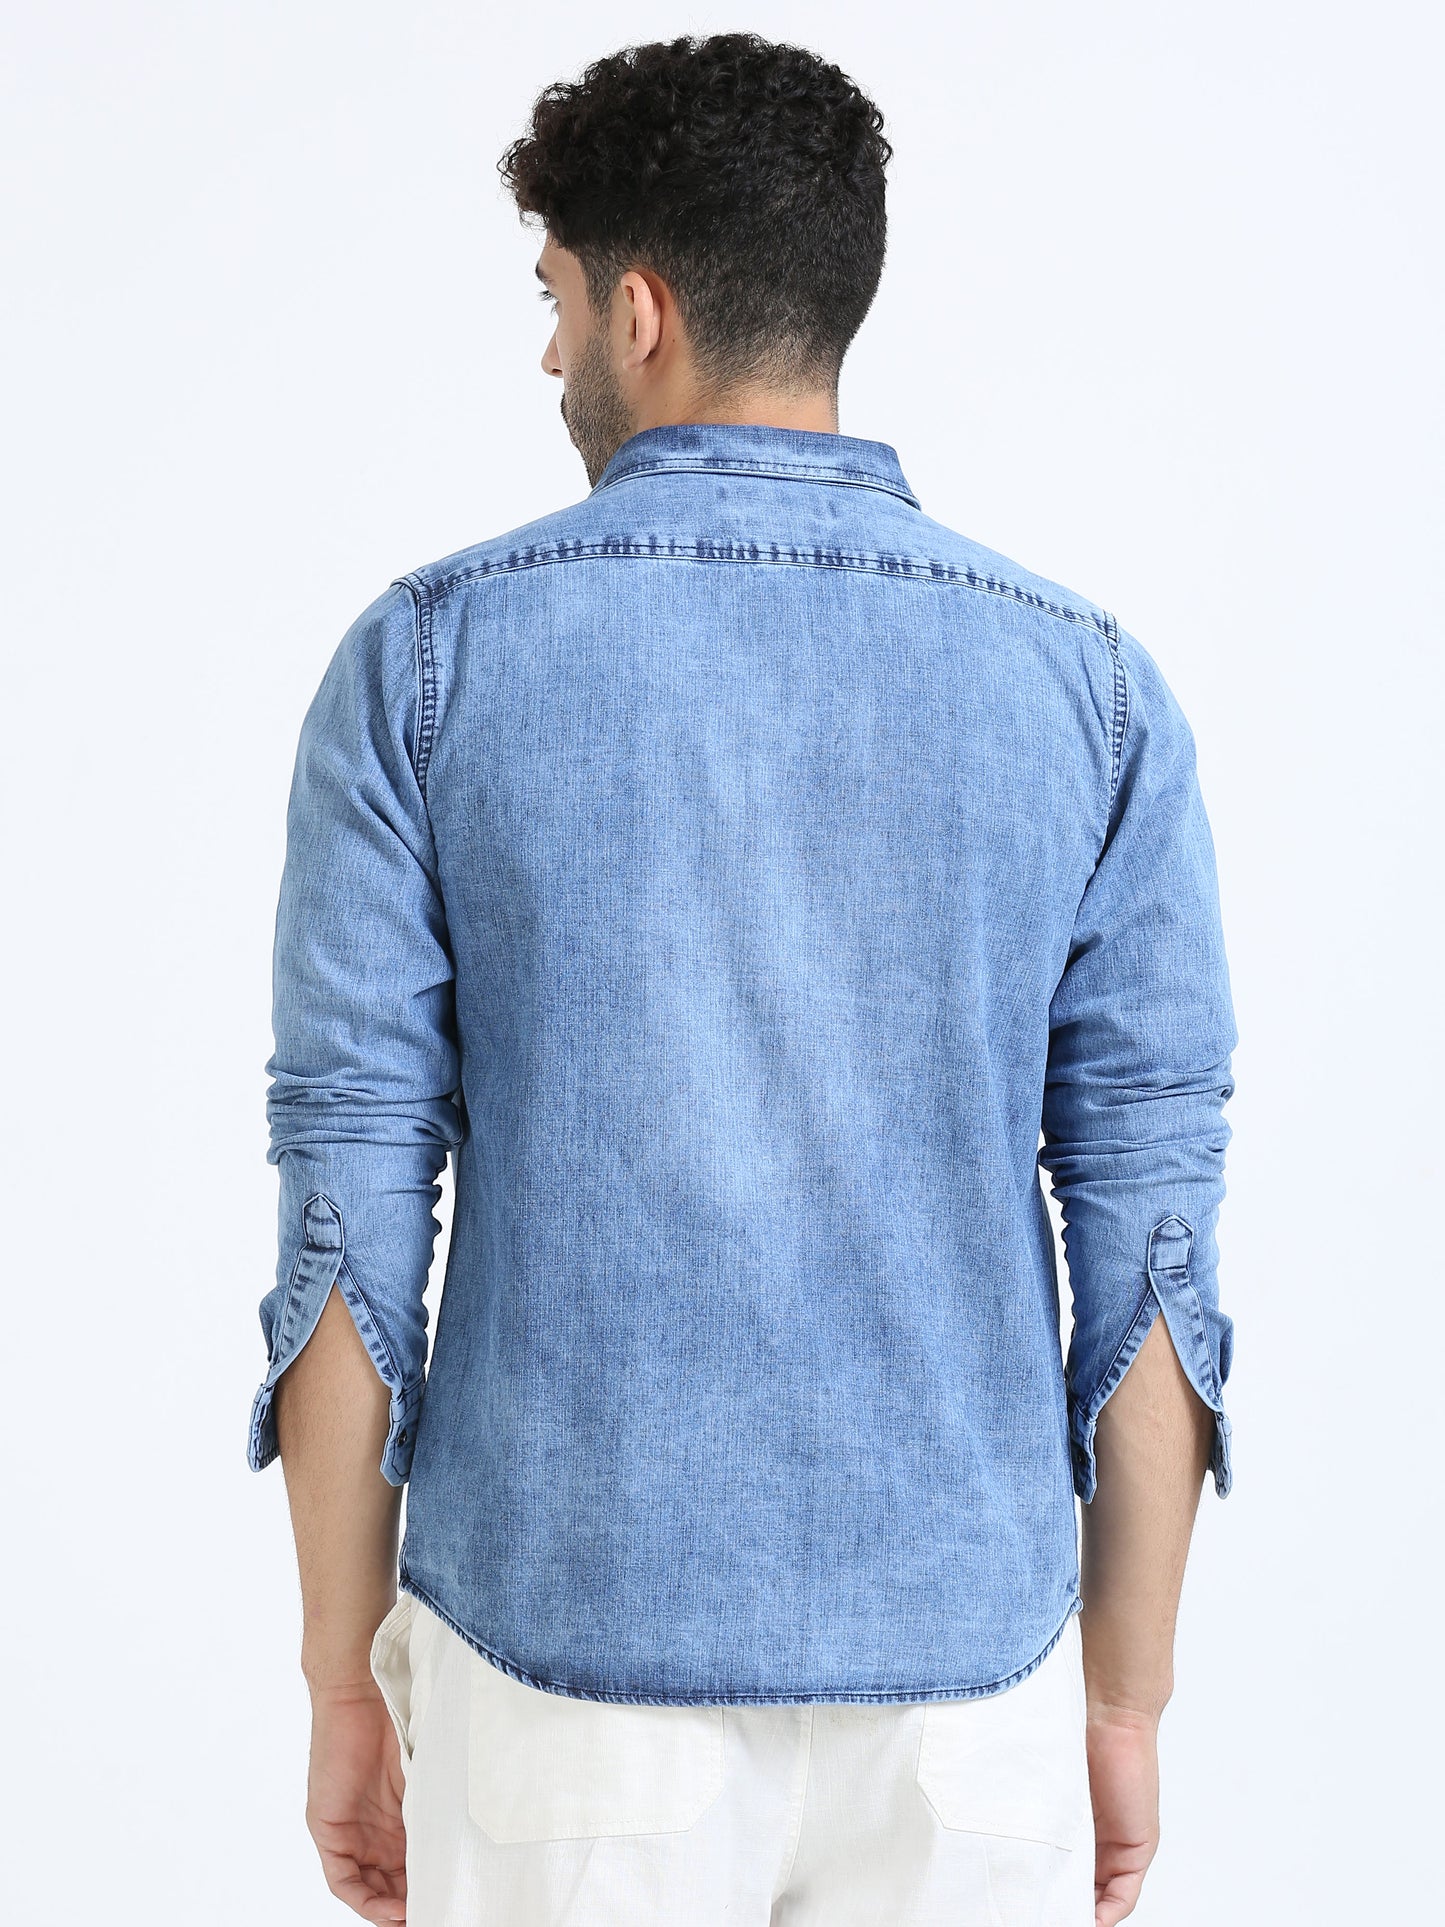 Wild blue double pocket solid denim shirt for men